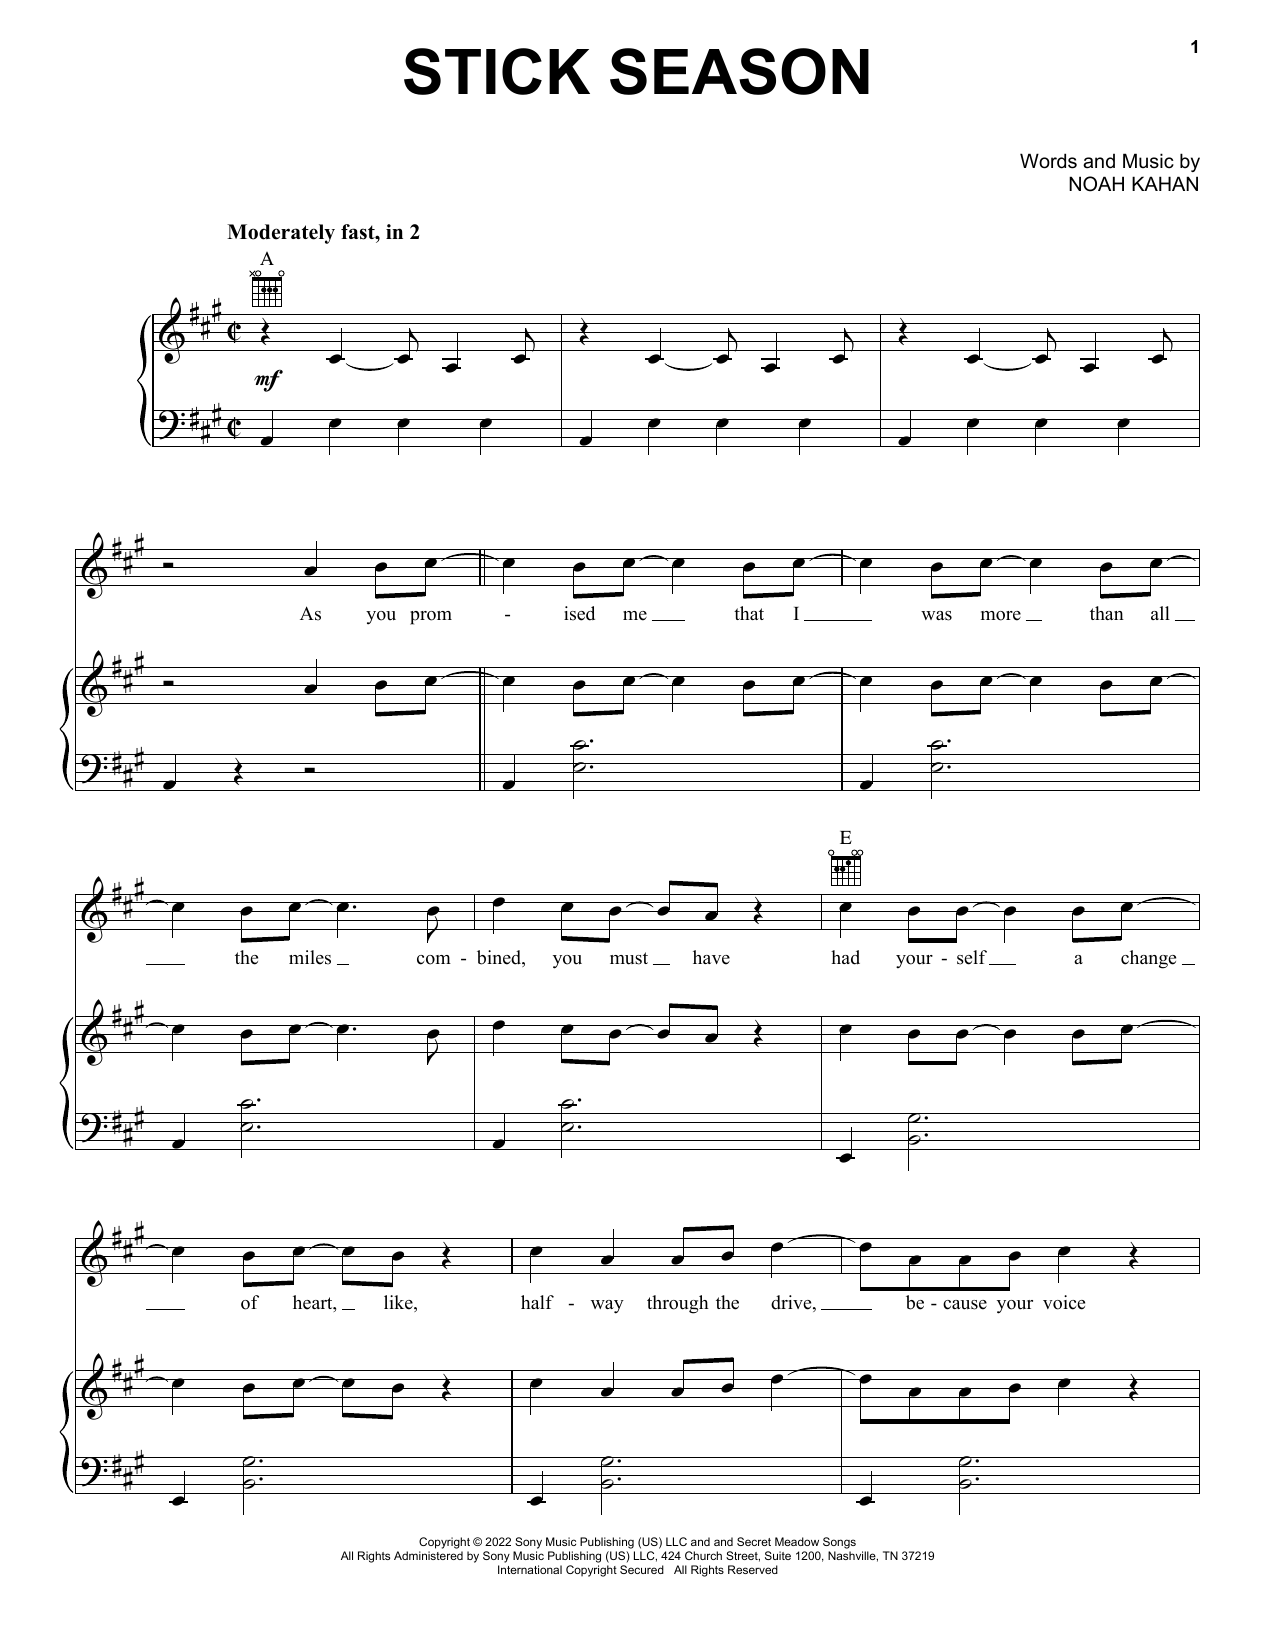 Noah Kahan Stick Season Sheet Music Notes & Chords for Guitar Lead Sheet - Download or Print PDF